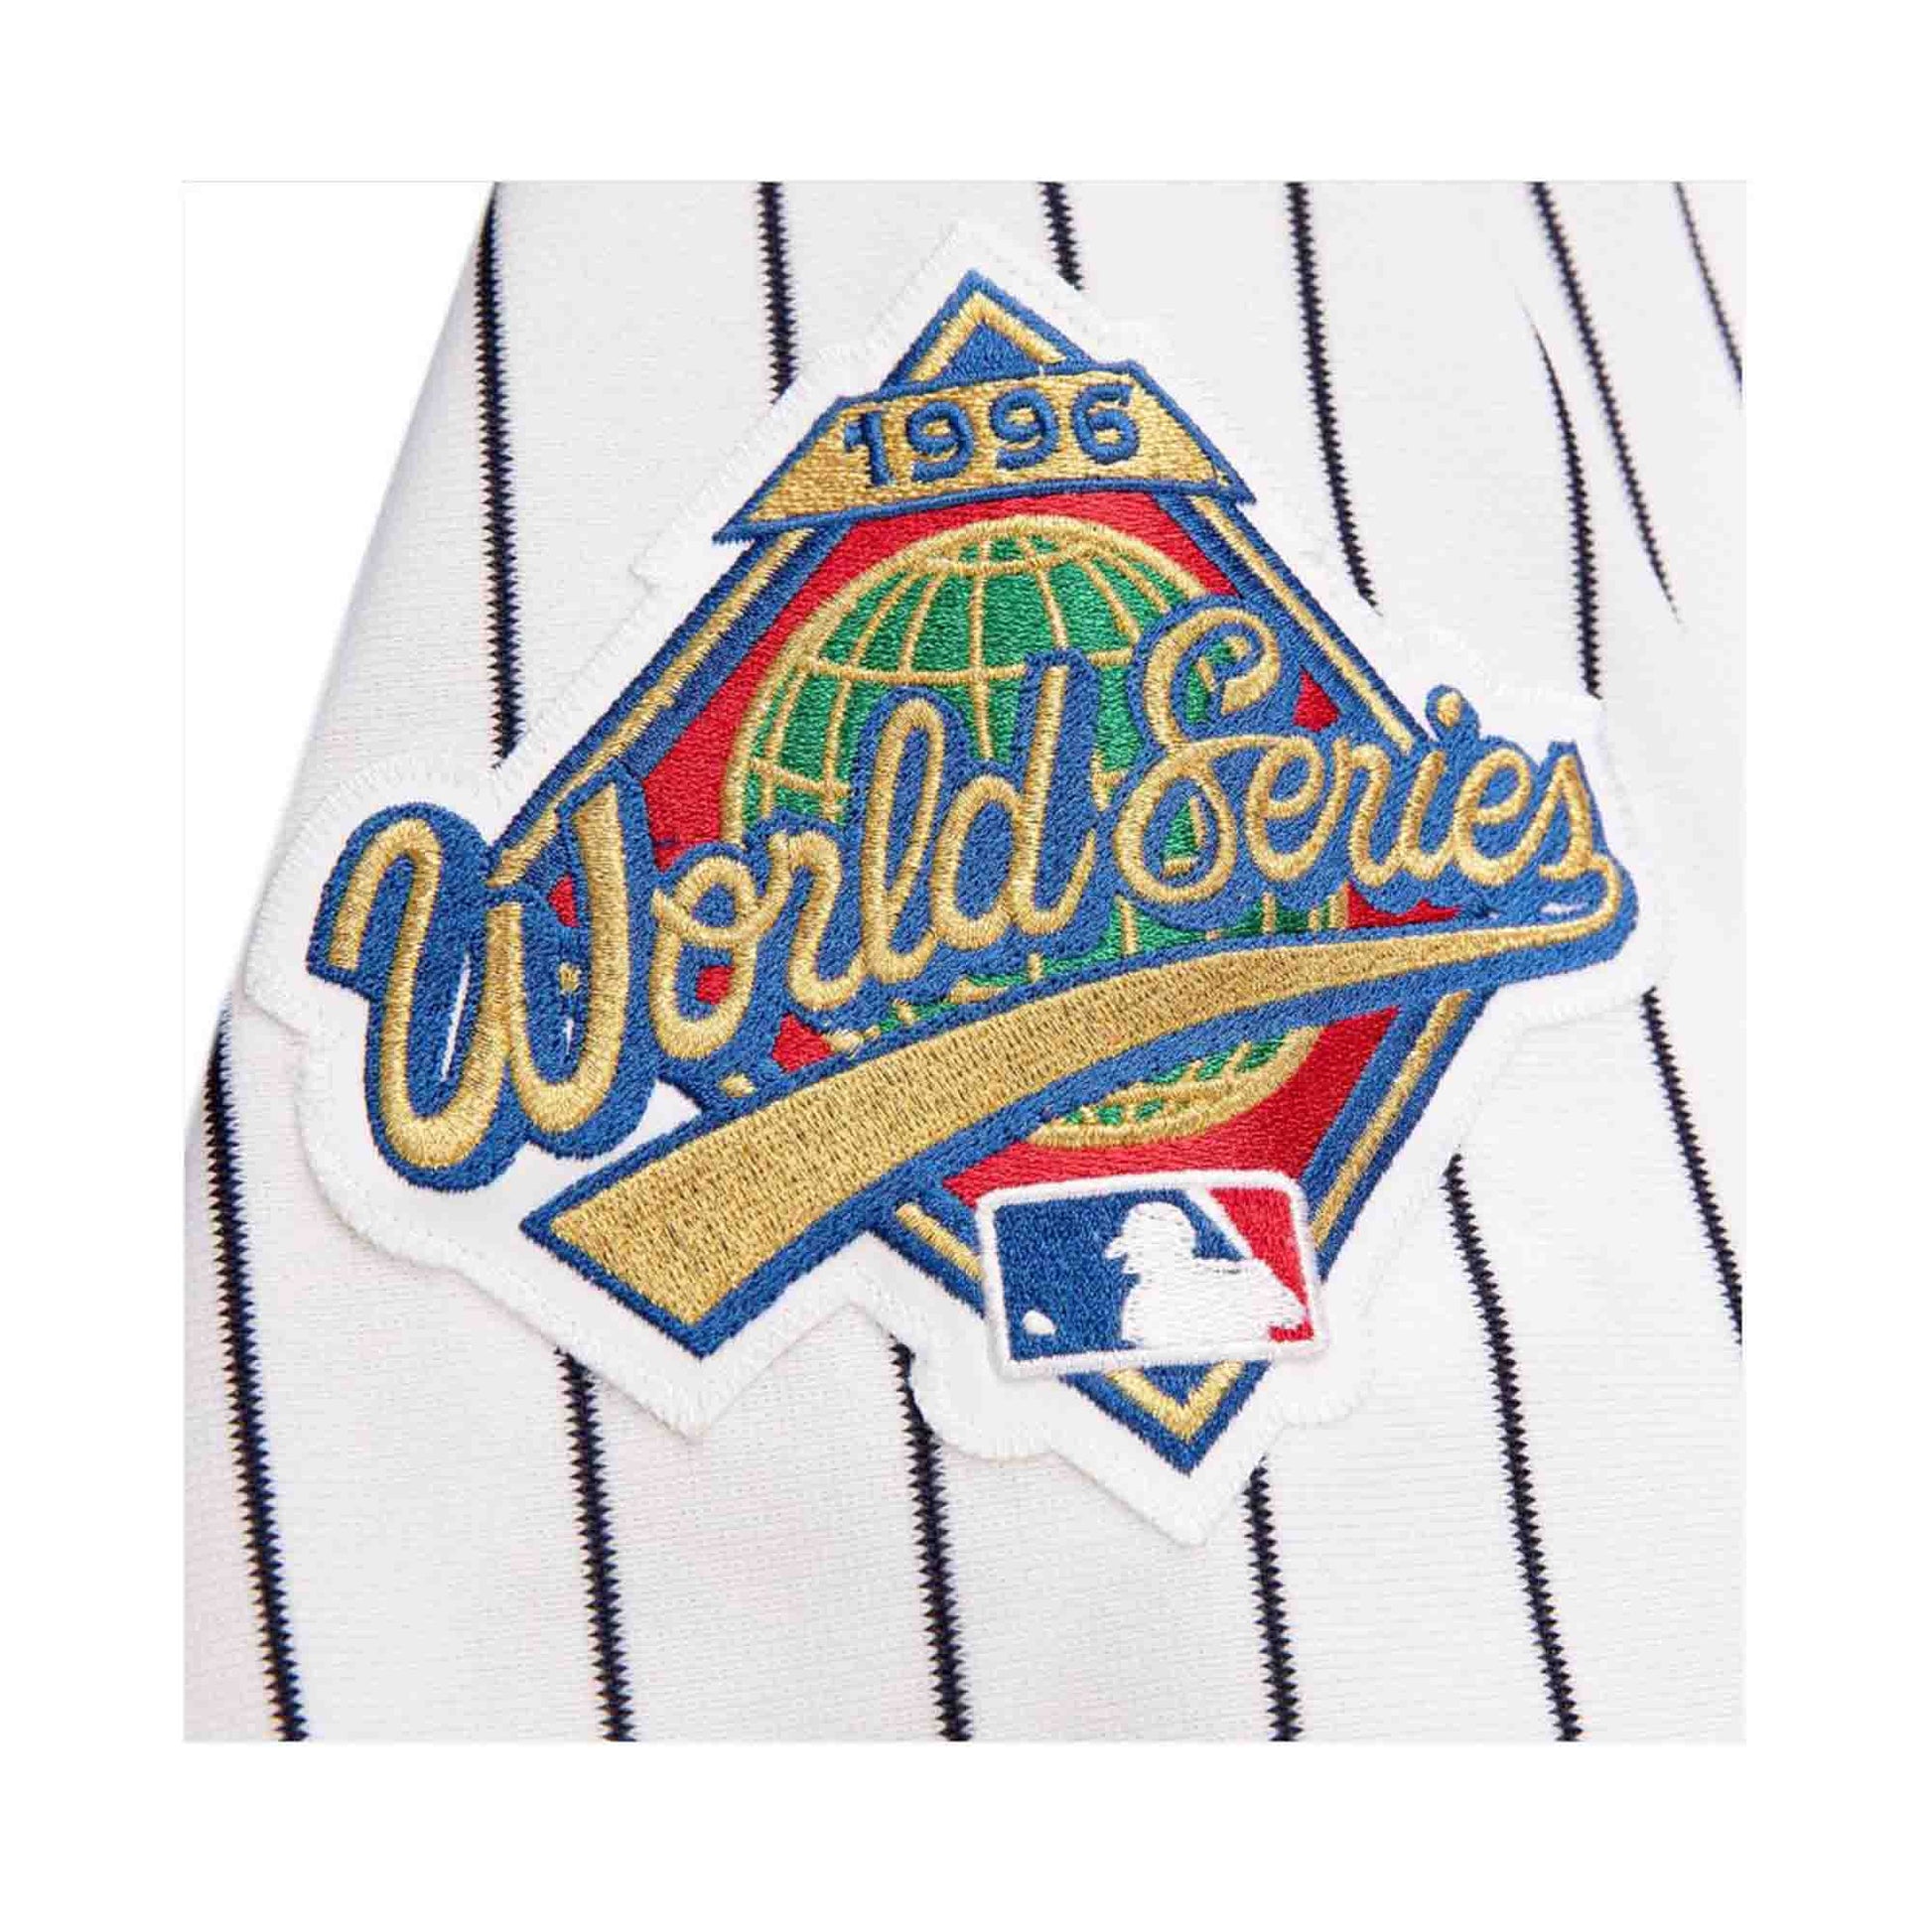 1996 world series jersey